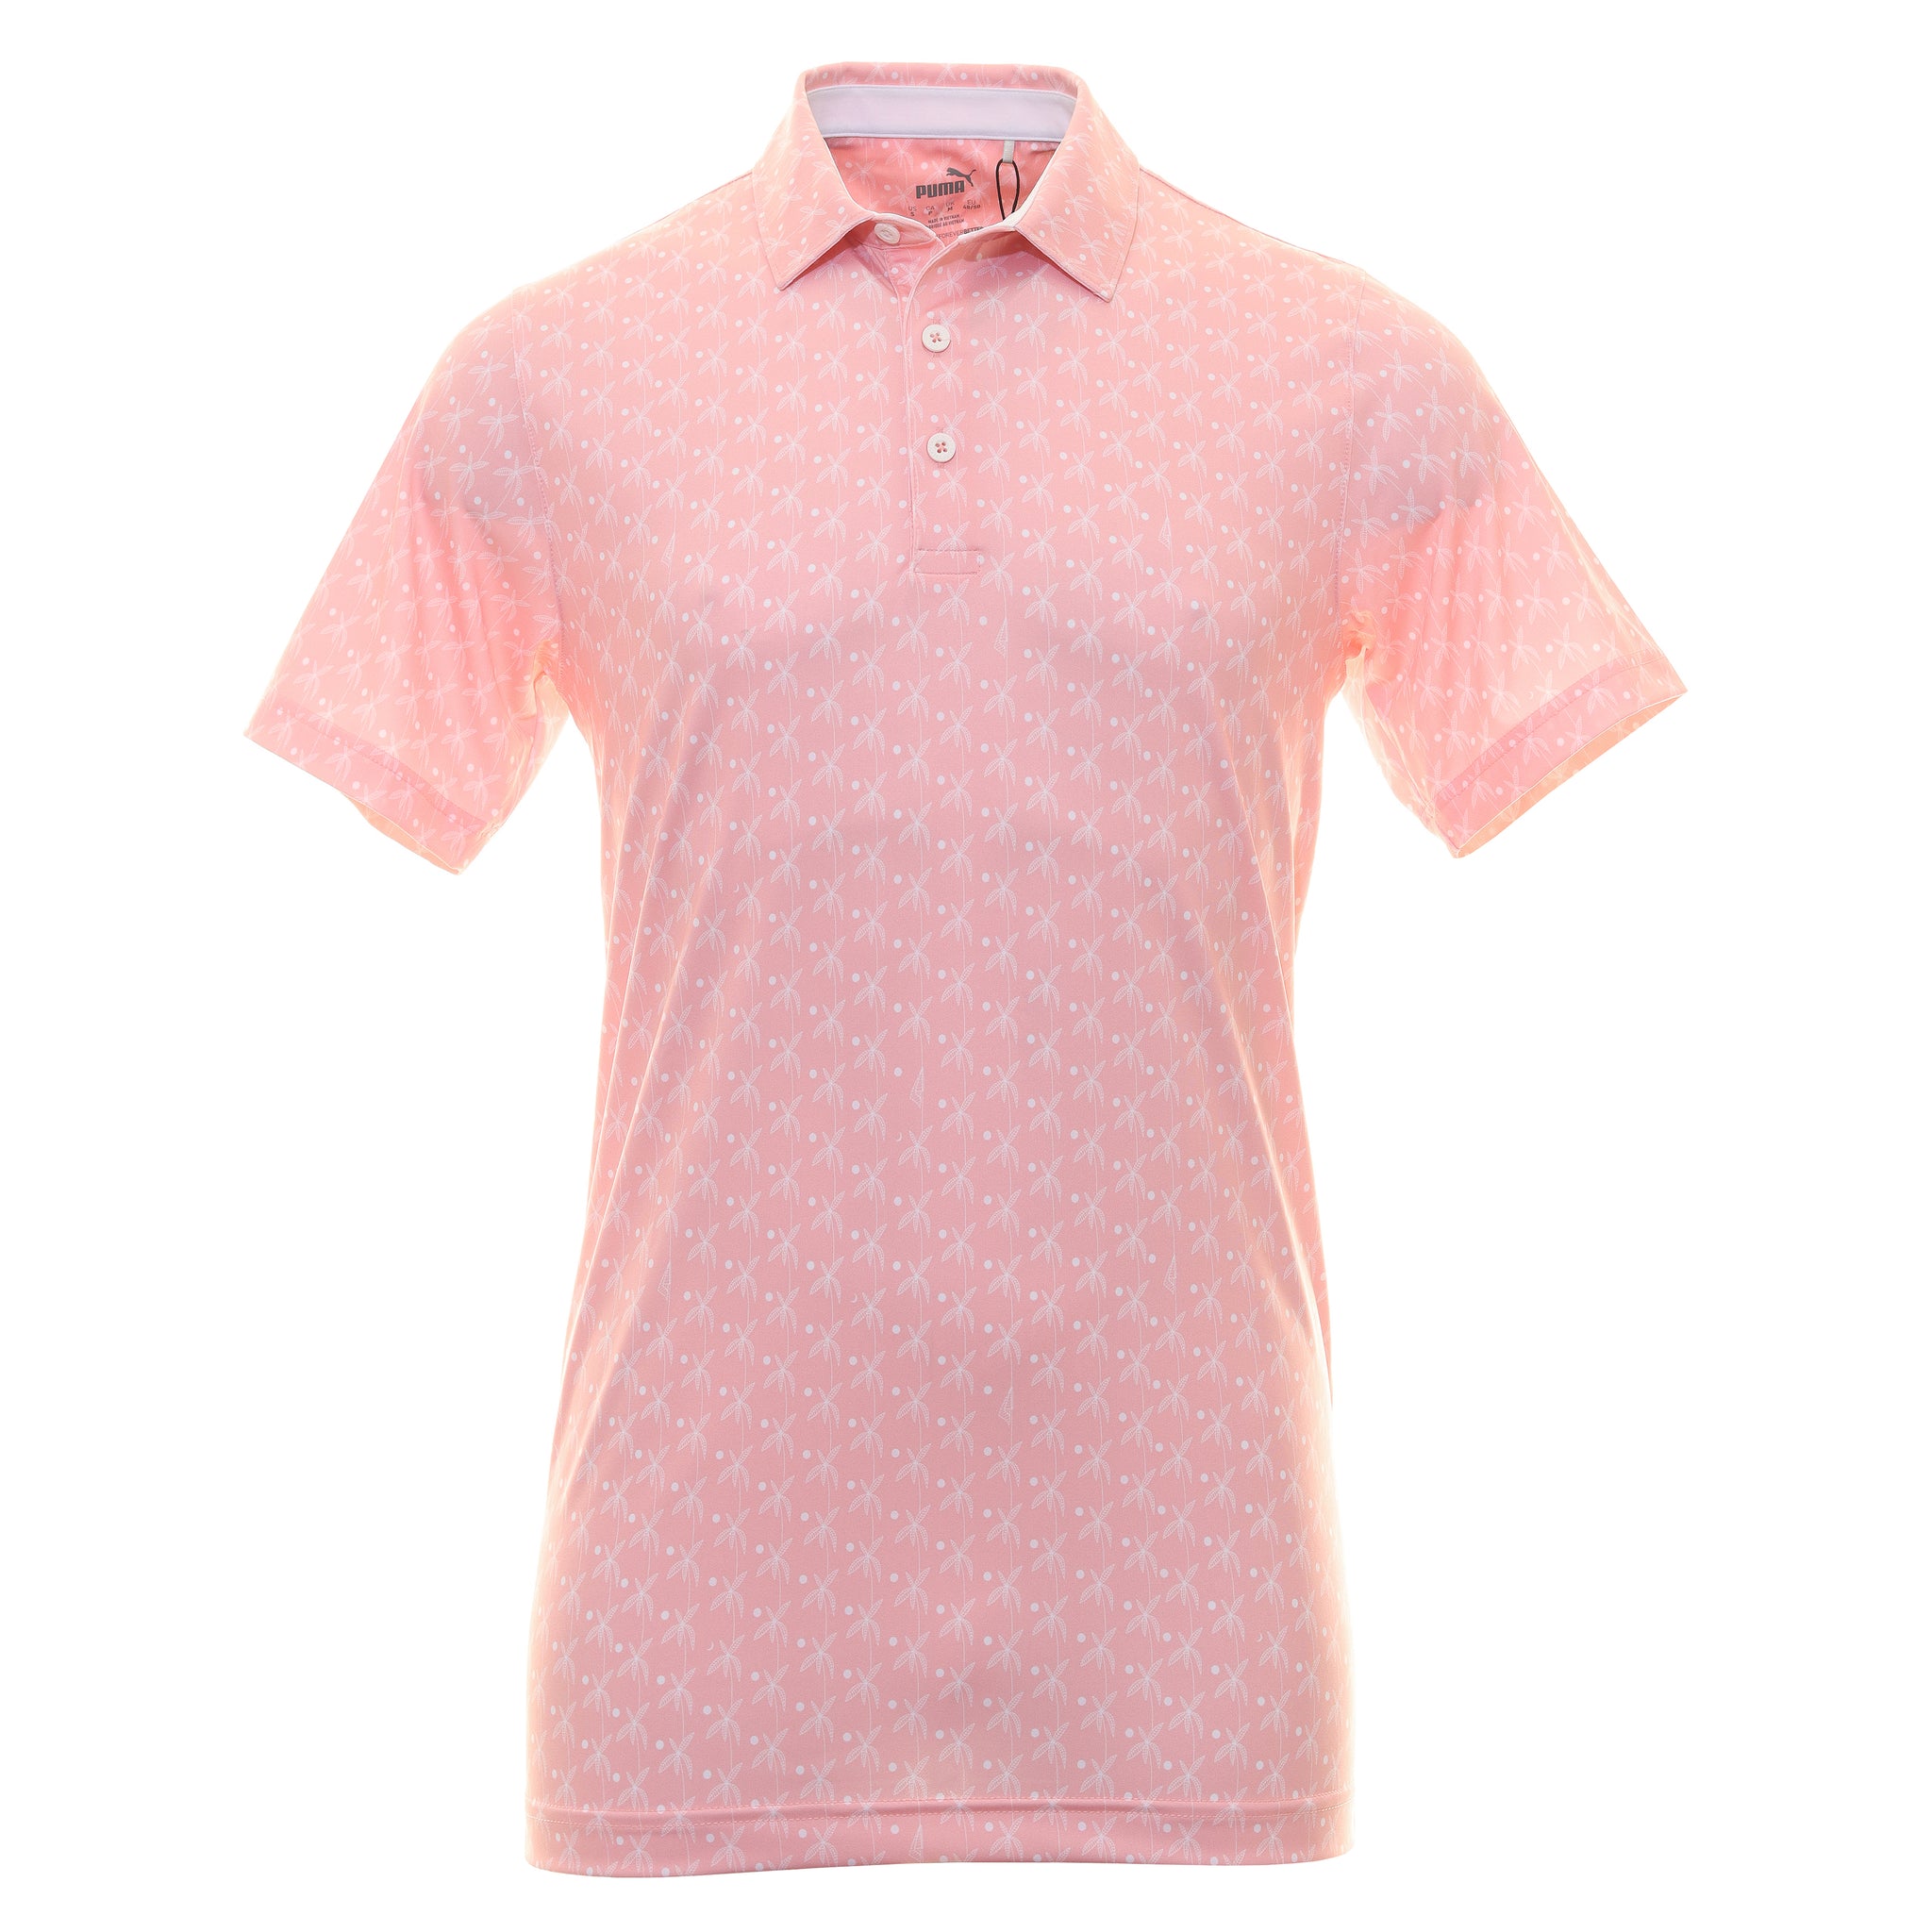 puma-golf-palms-polo-shirt-621549-peach-smoothie-white-glow-06